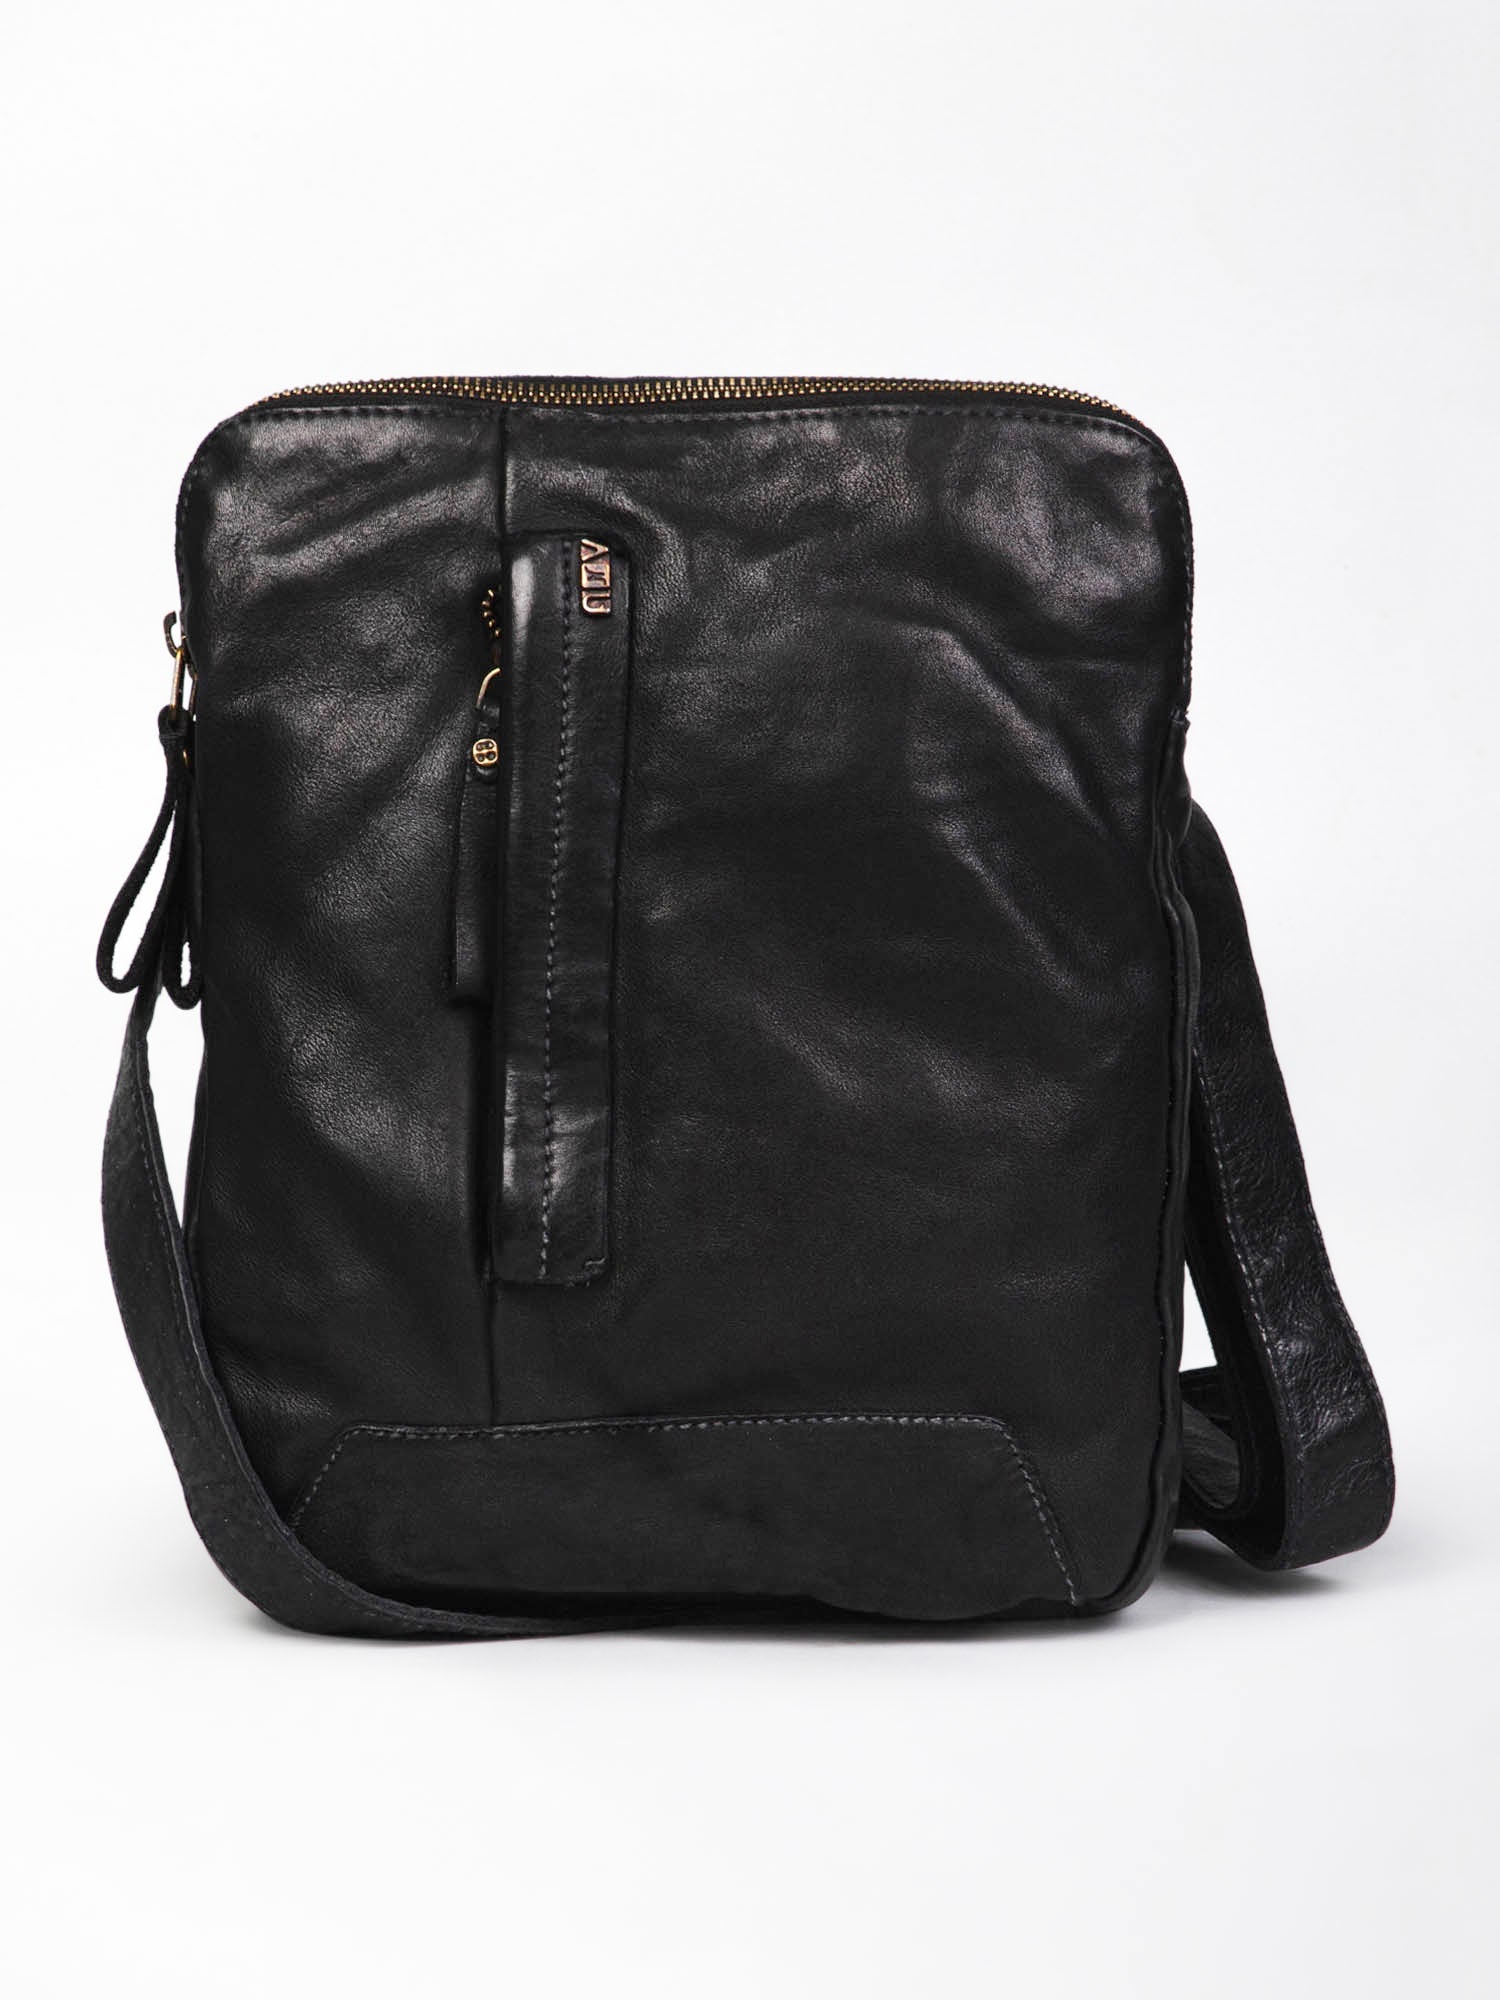 Black Leather Washed Look Crossbody Bag By Art N Vintage